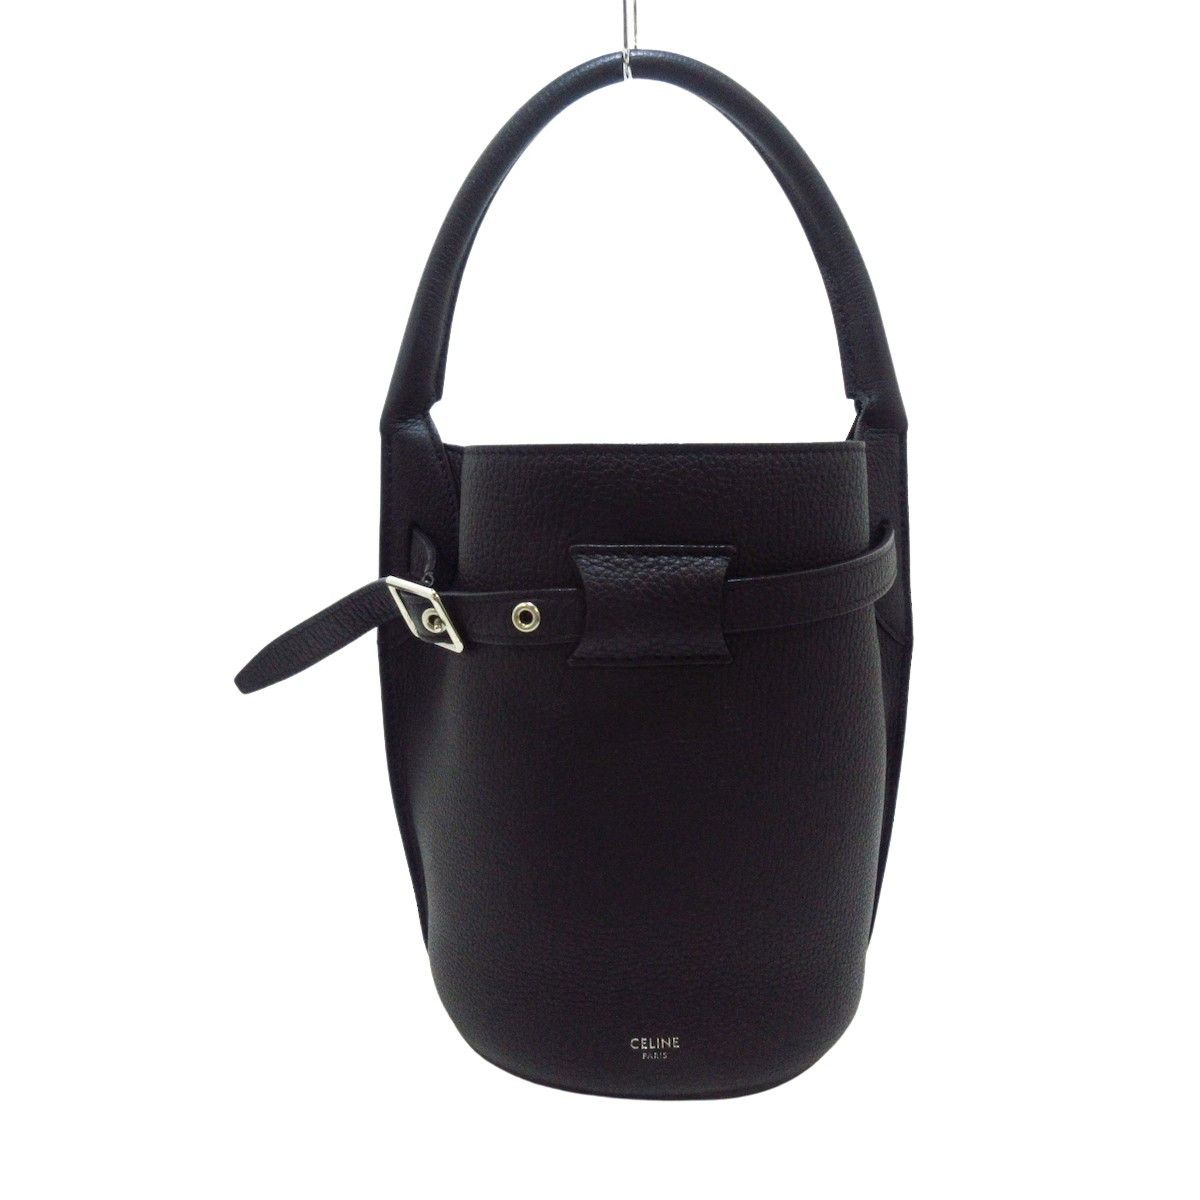 Celine Céline Big bag handbag | Grailed